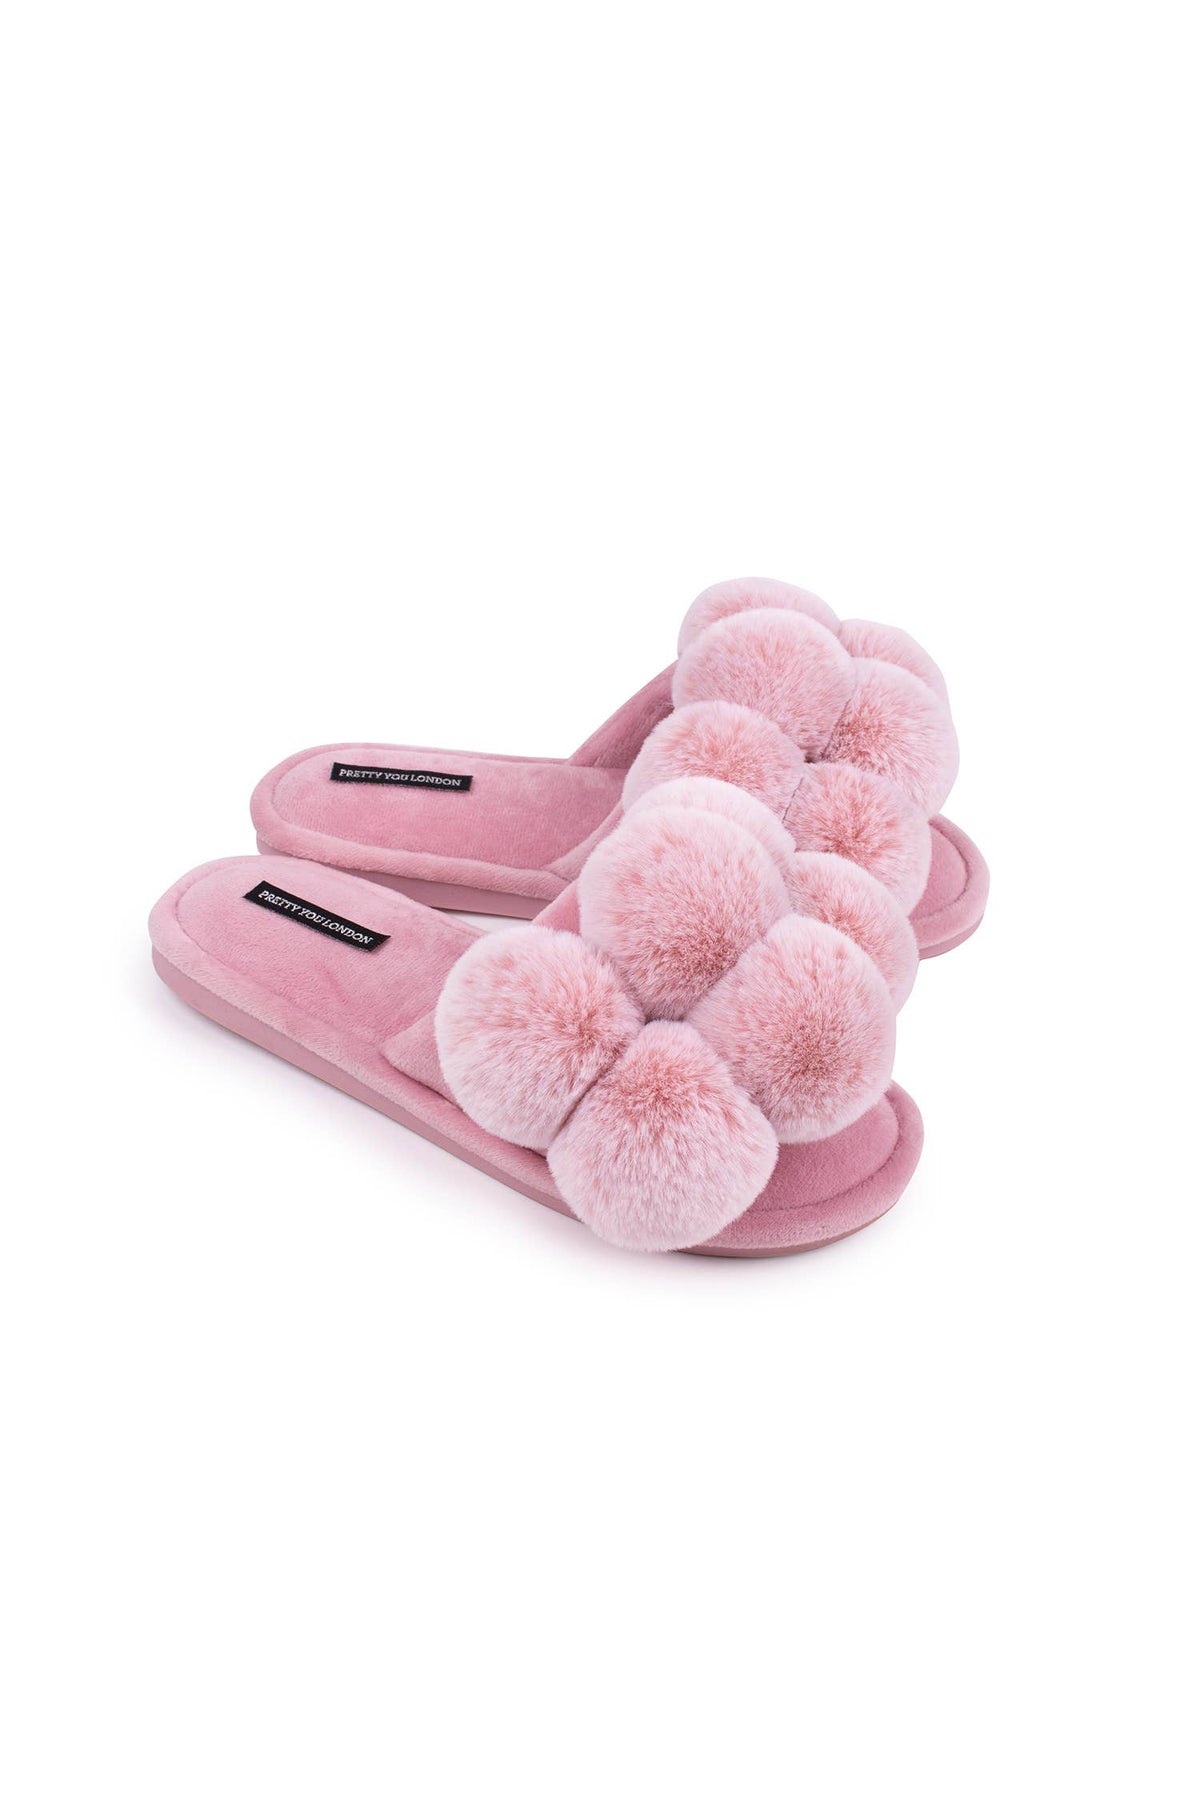 Dolly Pom Pom Slippers in Pink